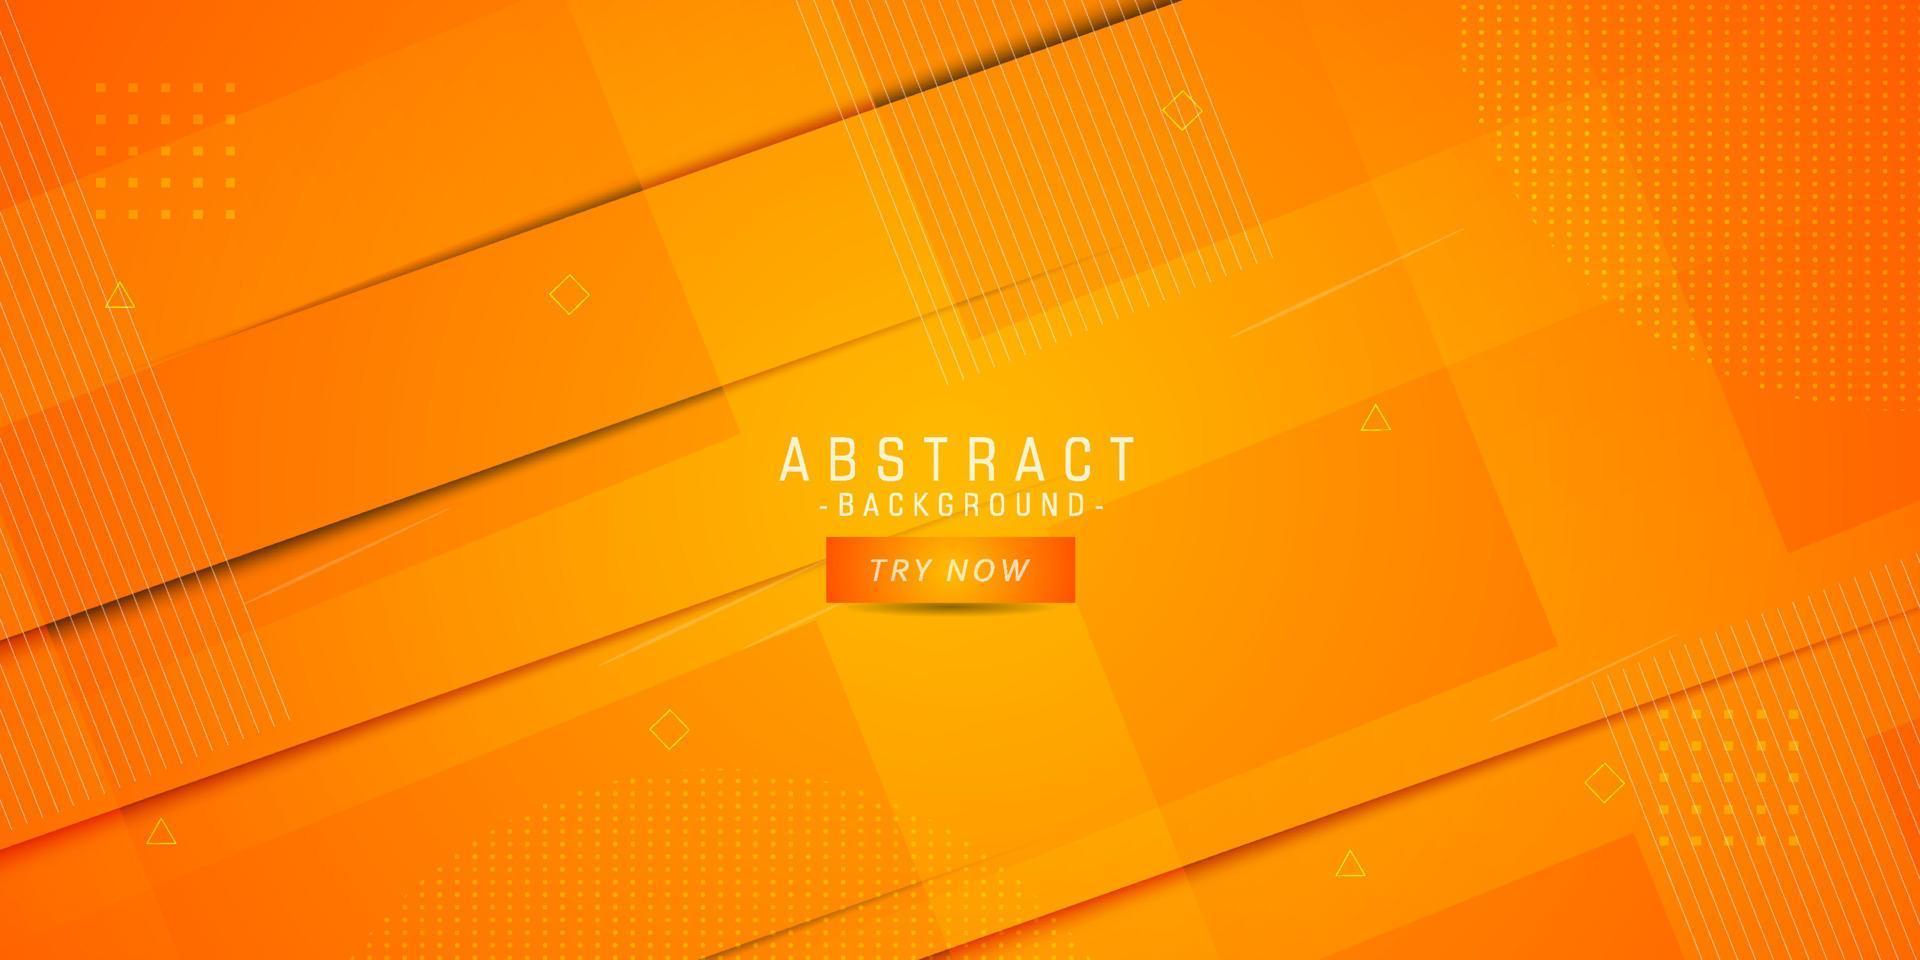 abstrakt orange bakgrund med enkla lines.colorful orange design. ljust och modernt med skugga 3d-koncept. eps10 vektor